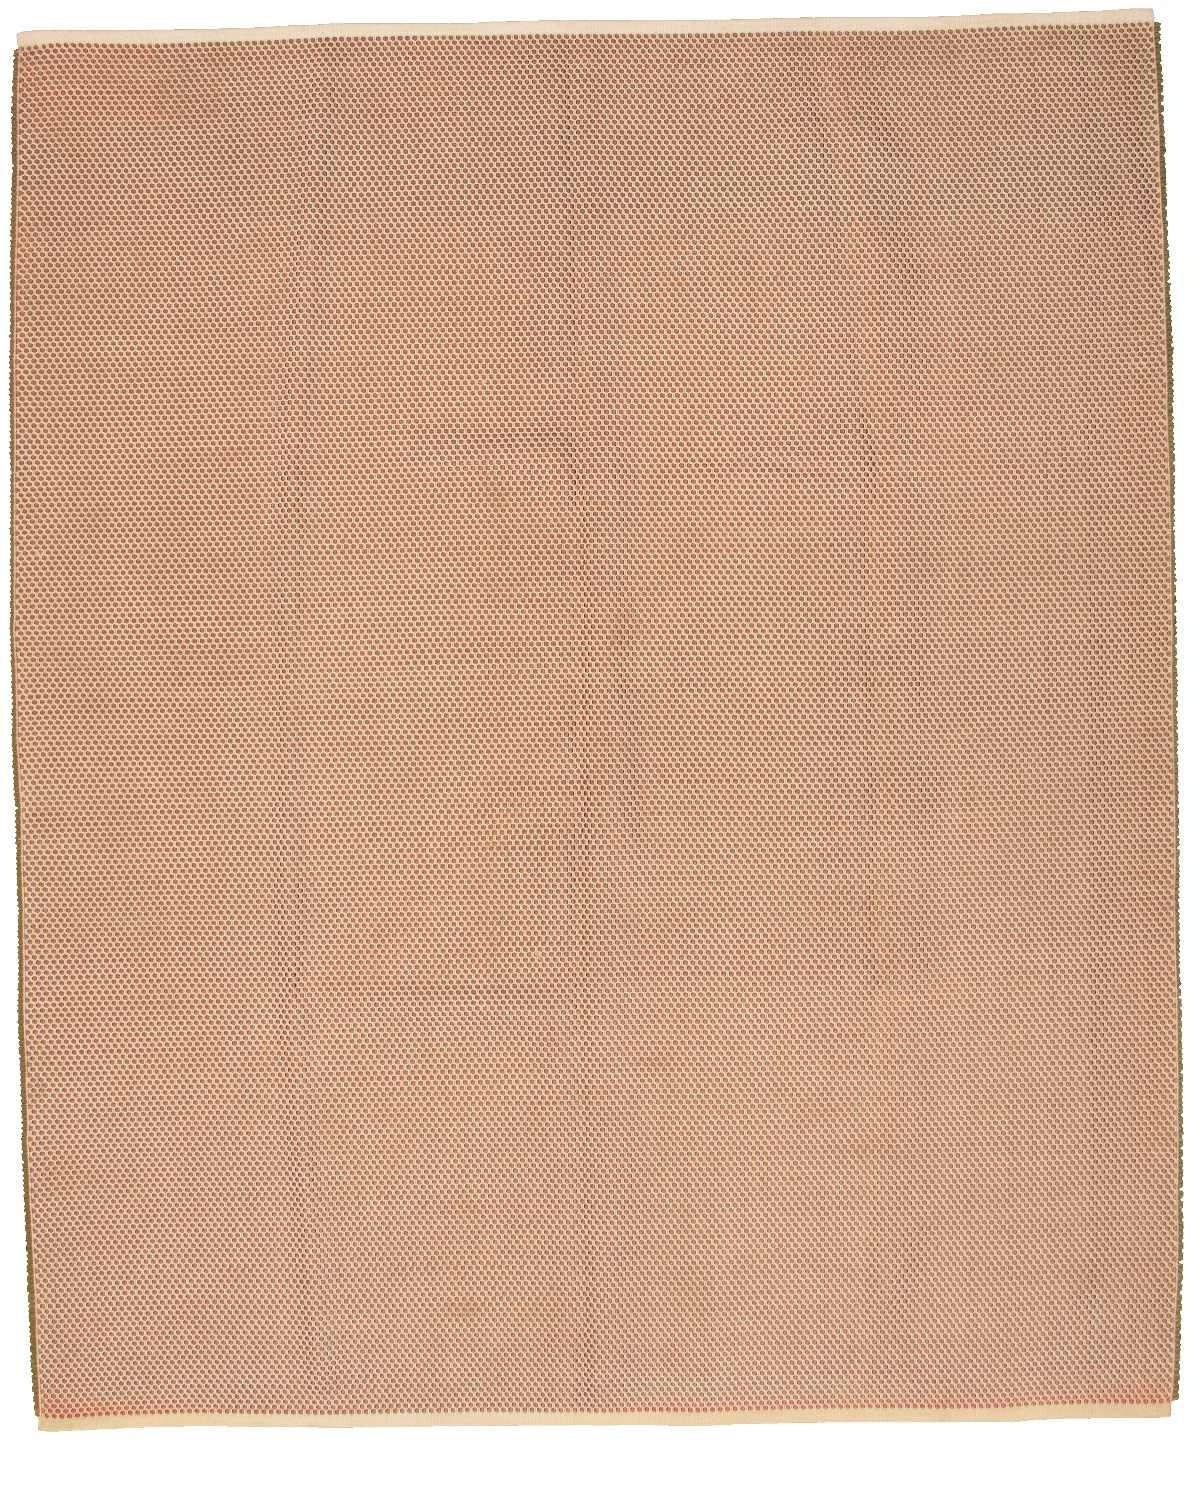 Handmade Honeycomb III Dark Copper Cotton/Polyester Rug 5'6" x 8'0" Size: 5'6" x 8'0"  